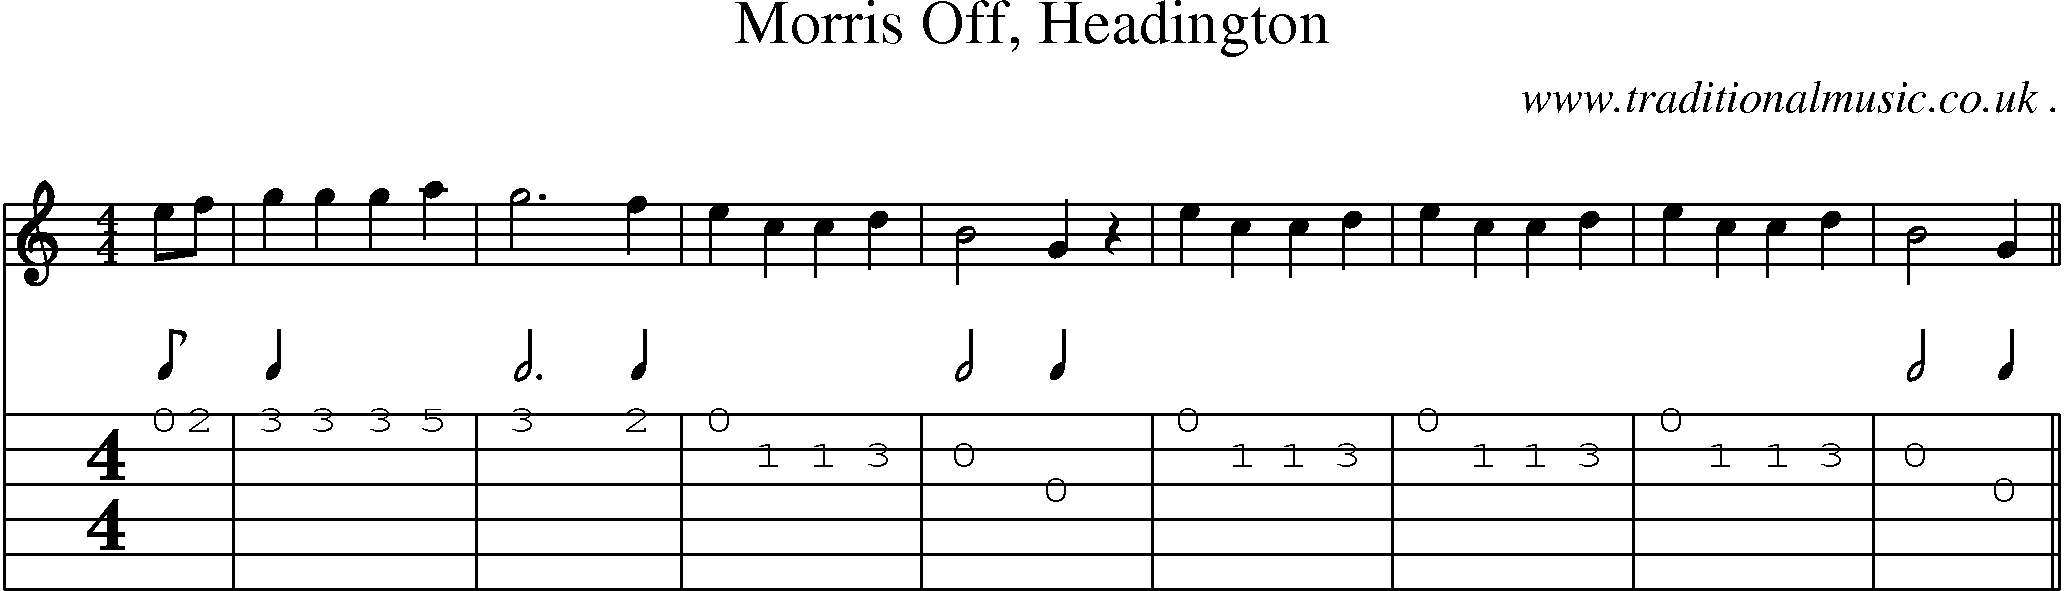 Sheet-Music and Guitar Tabs for Morris Off Headington